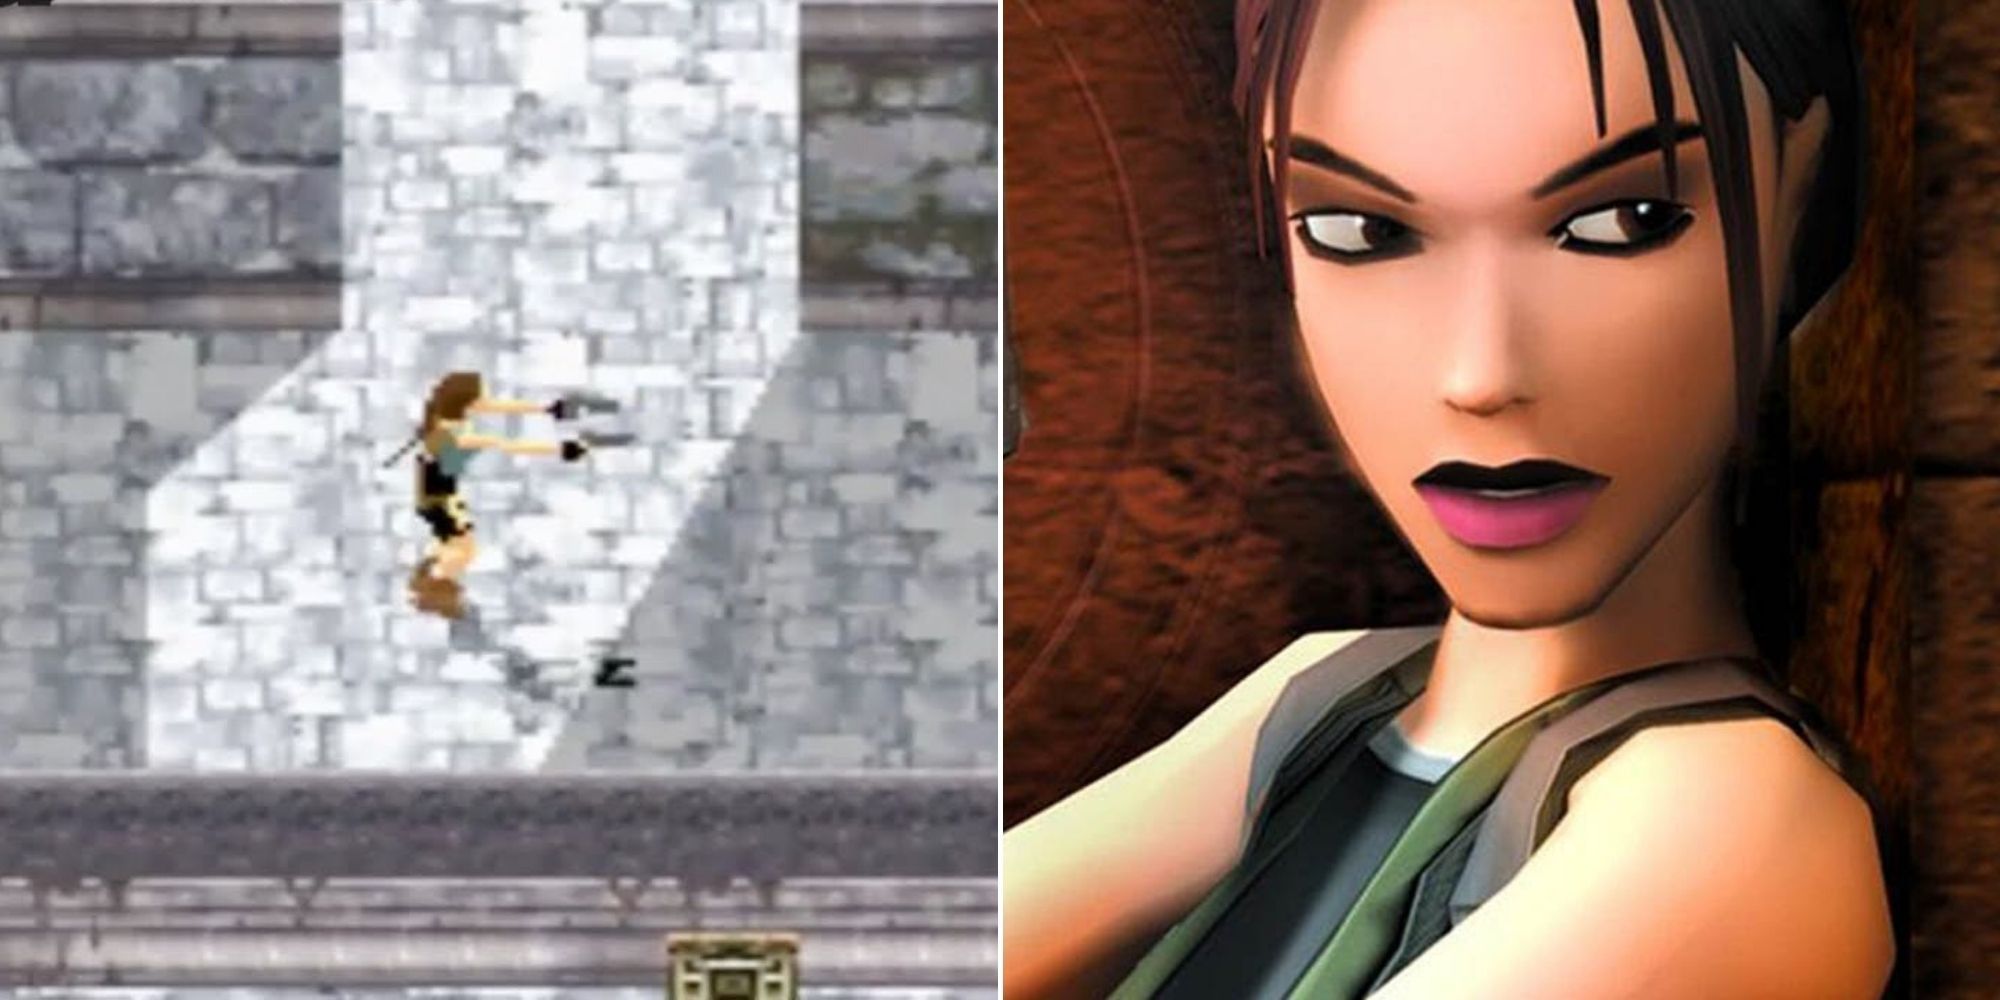  Lara Croft walking down a path with guns at the ready and a close up of Lara Croft in Tomb Raider: The Prophesy